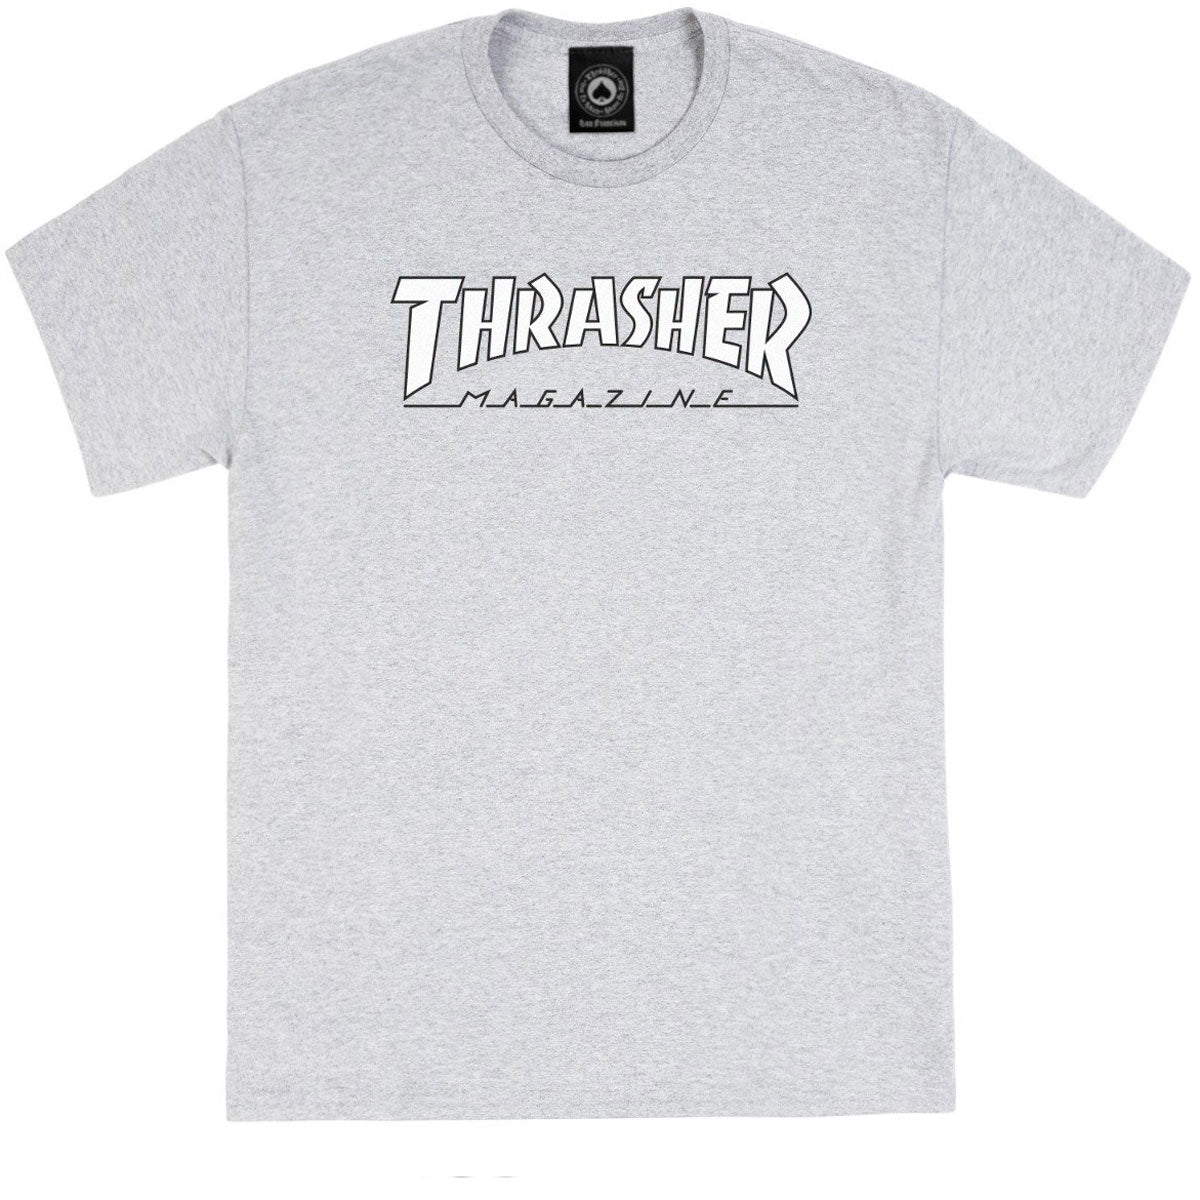 Thrasher Outlined Logo T-Shirt - Grey/White image 1